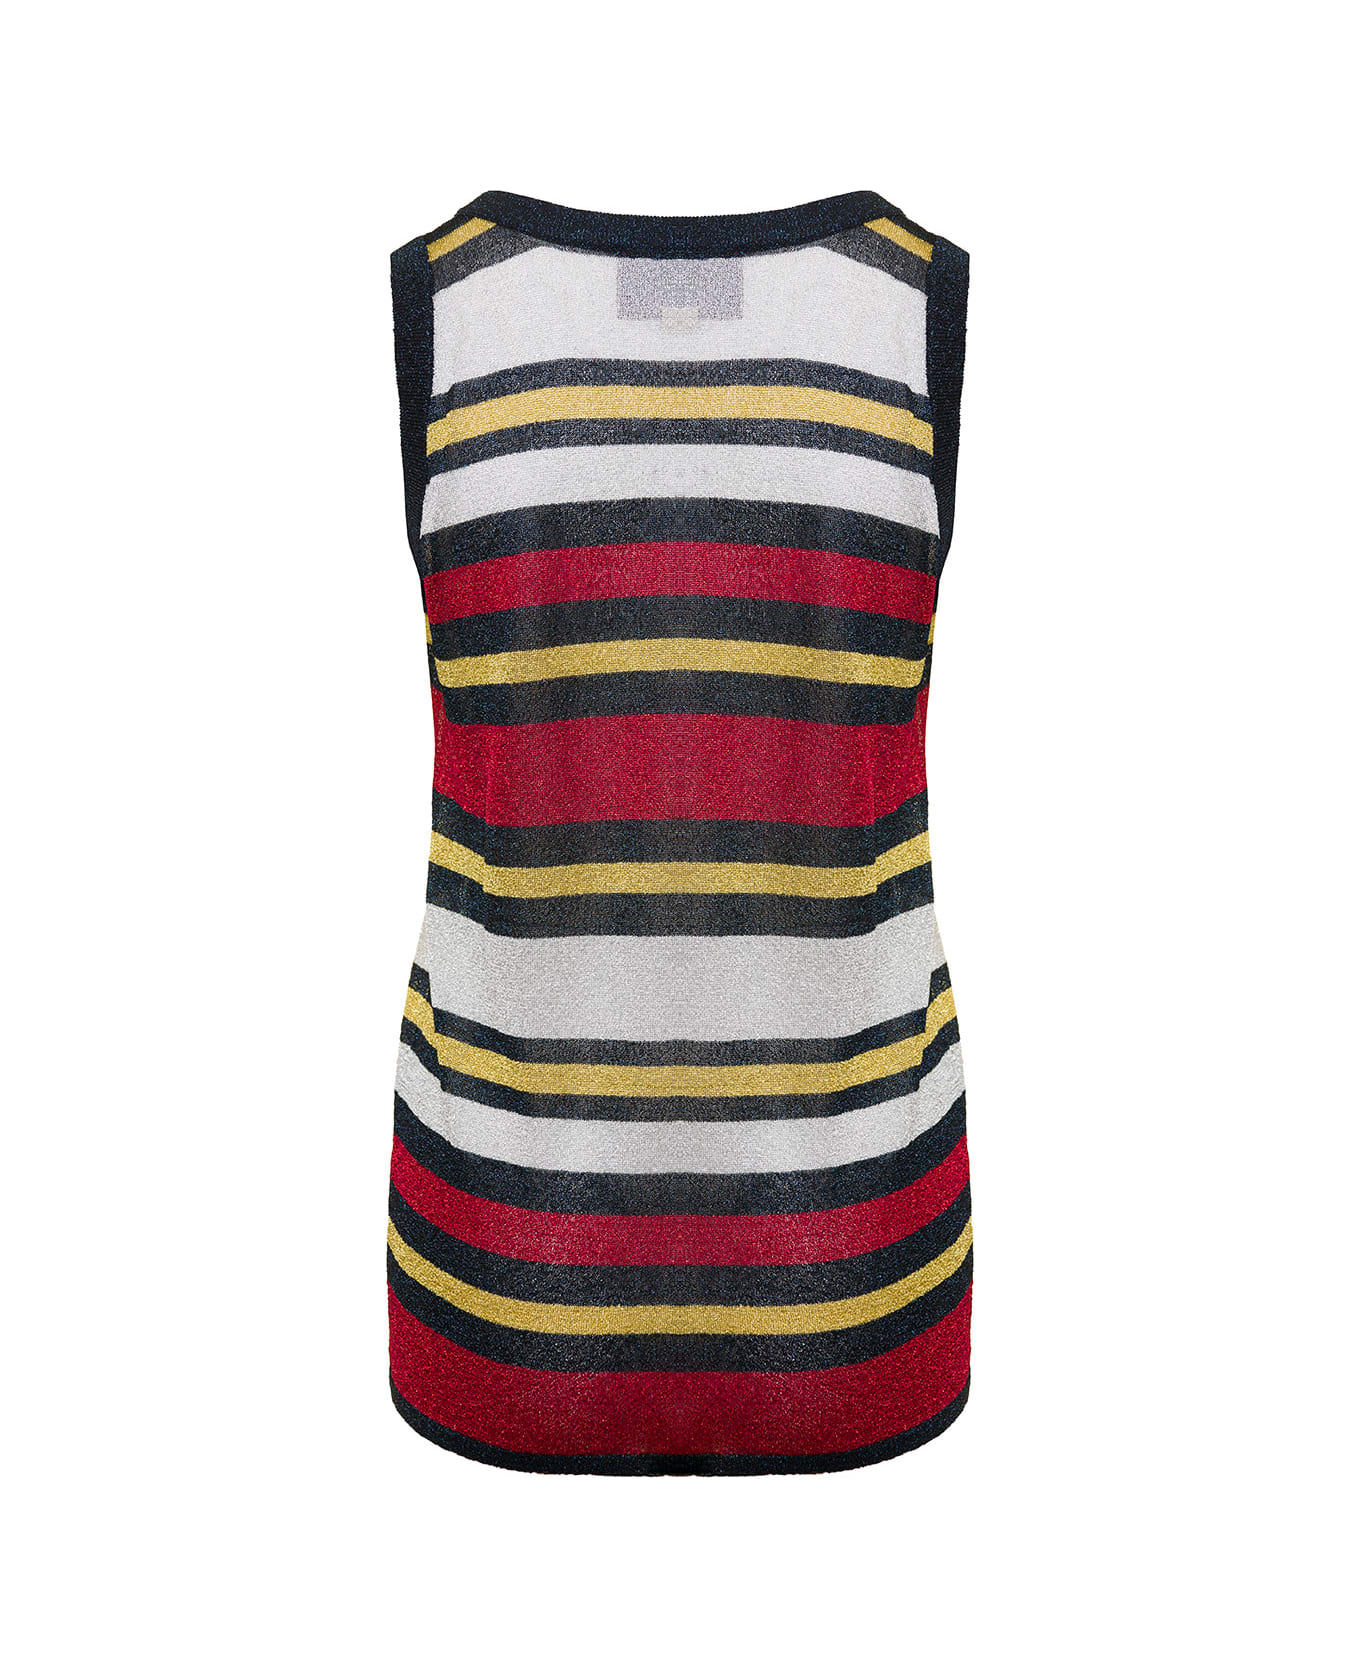 Gucci Multicolor Sleeveless Striped Top In Lurex Woman - Multicolor タンクトップ